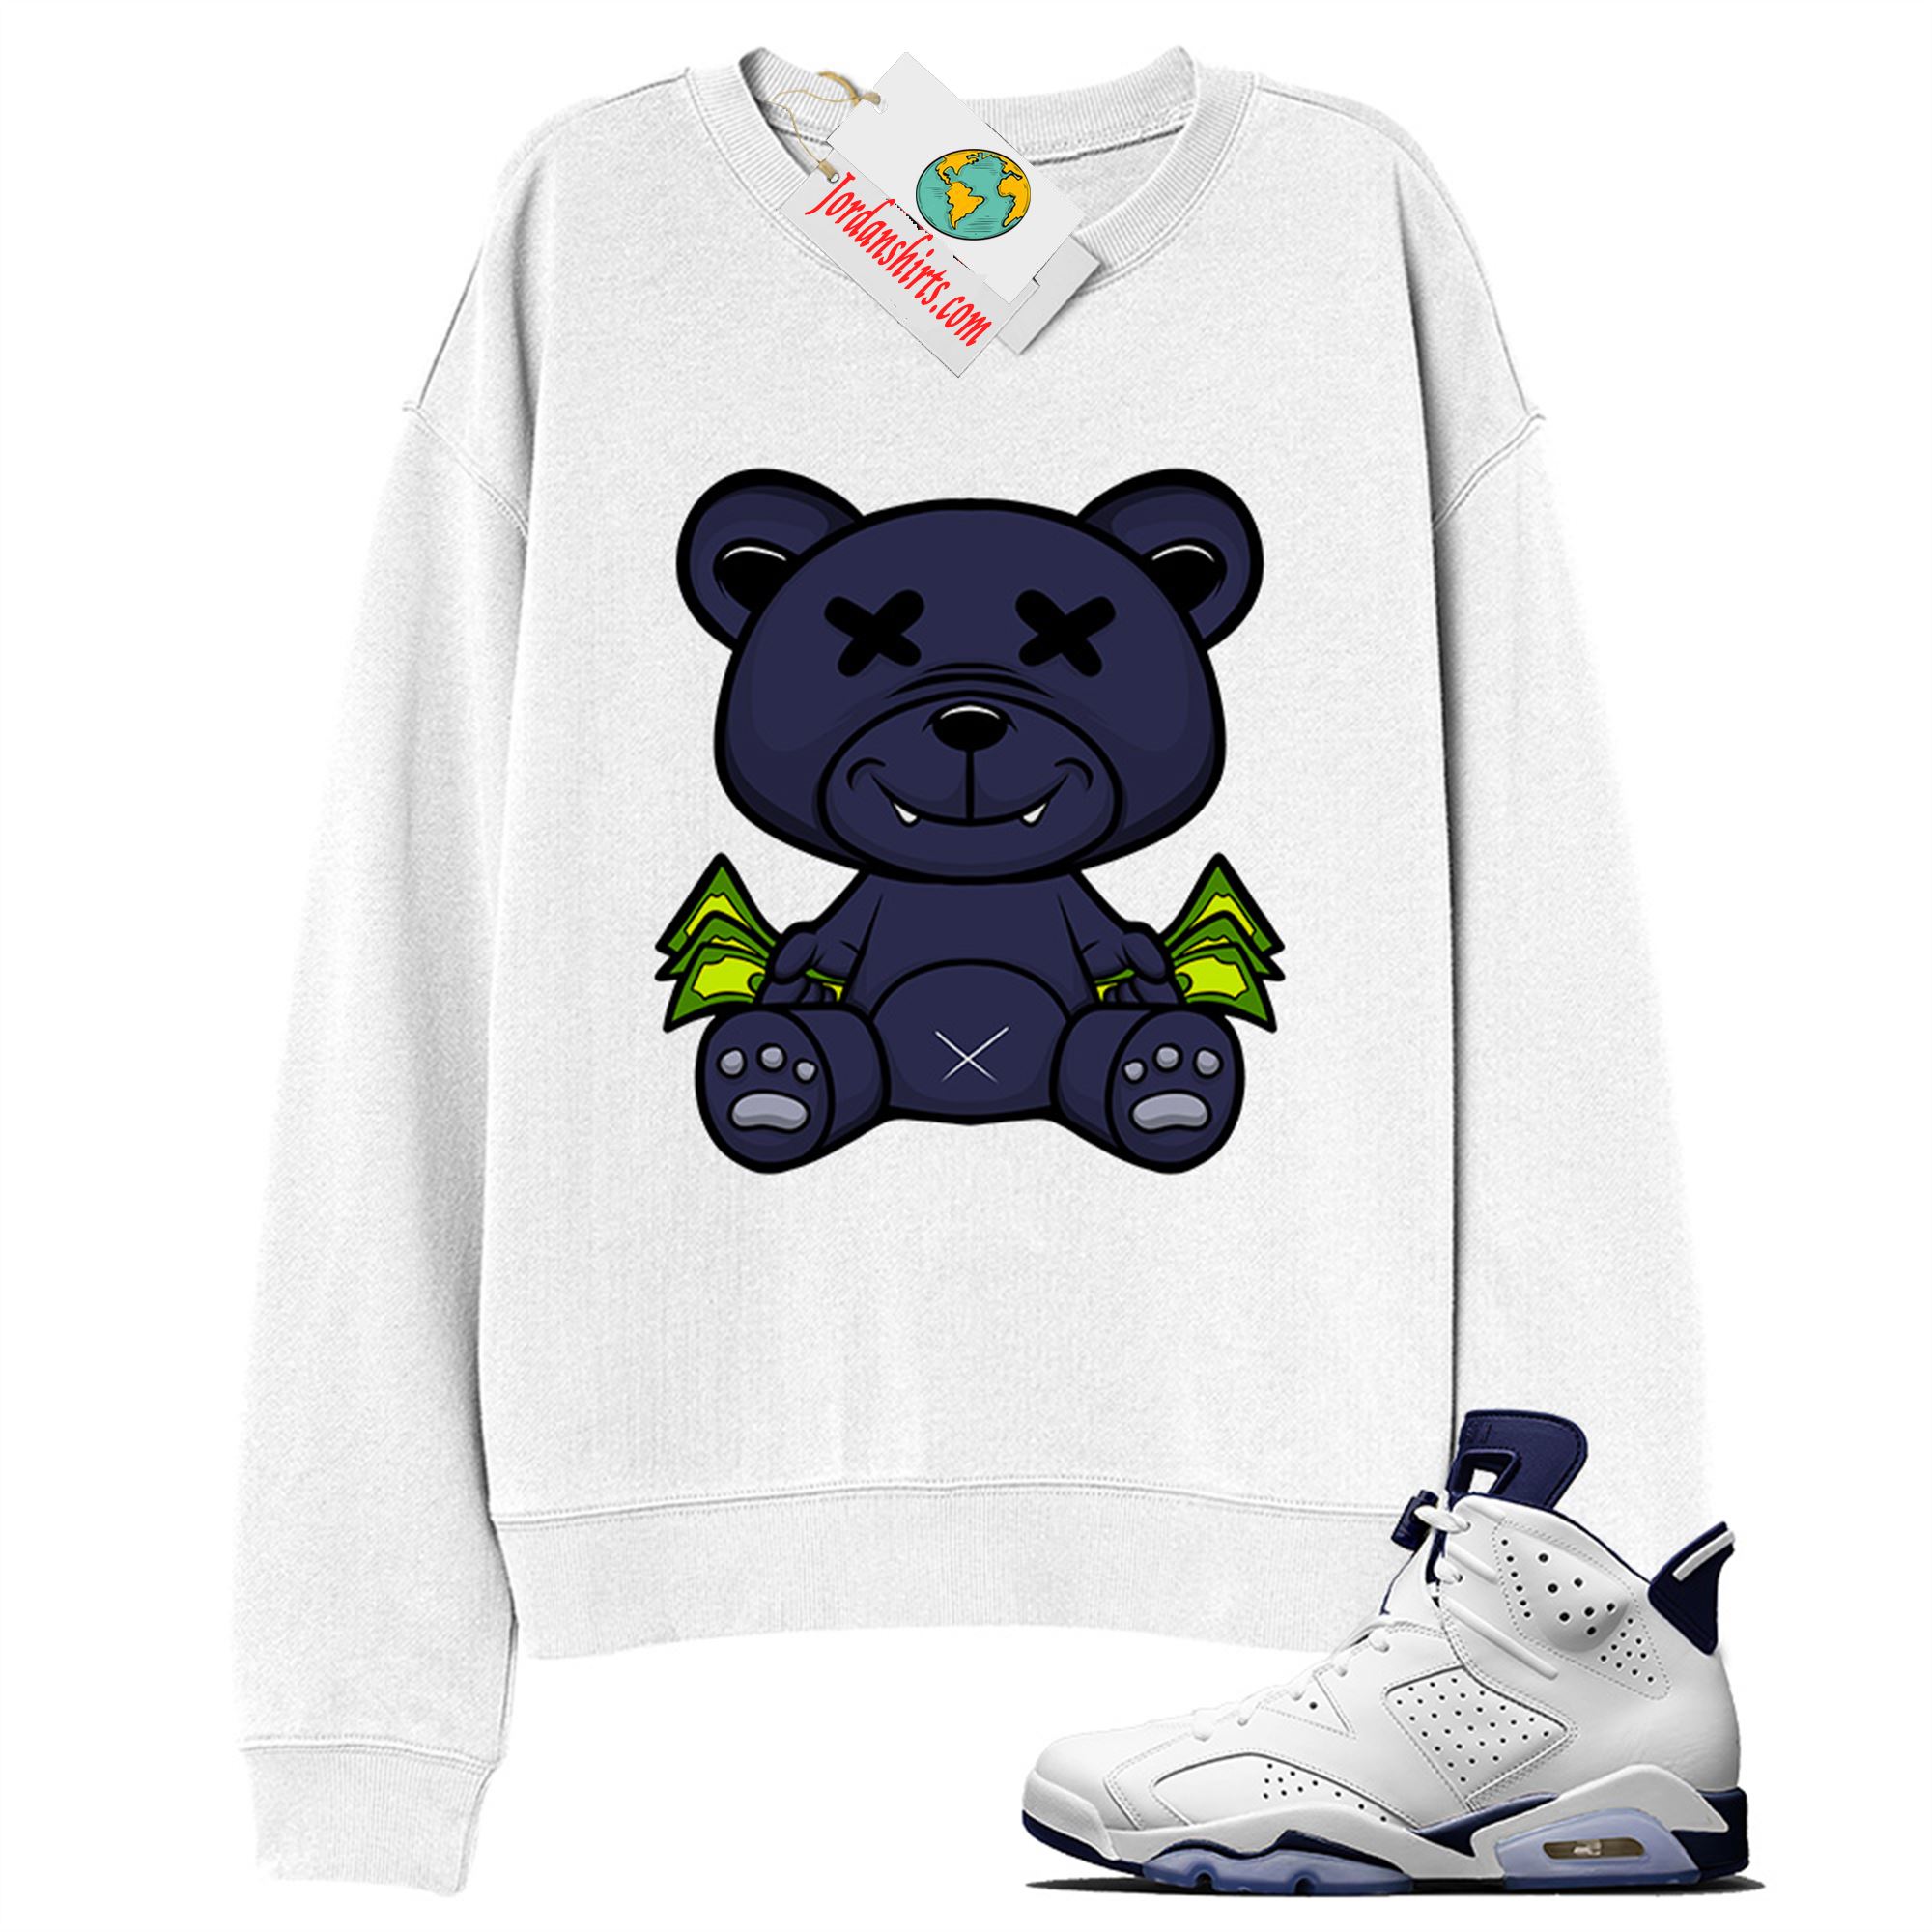 Jordan 6 Sweatshirt, Rich Teddy Bear White Sweatshirt Air Jordan 6 Midnight Navy 6s Full Size Up To 5xl